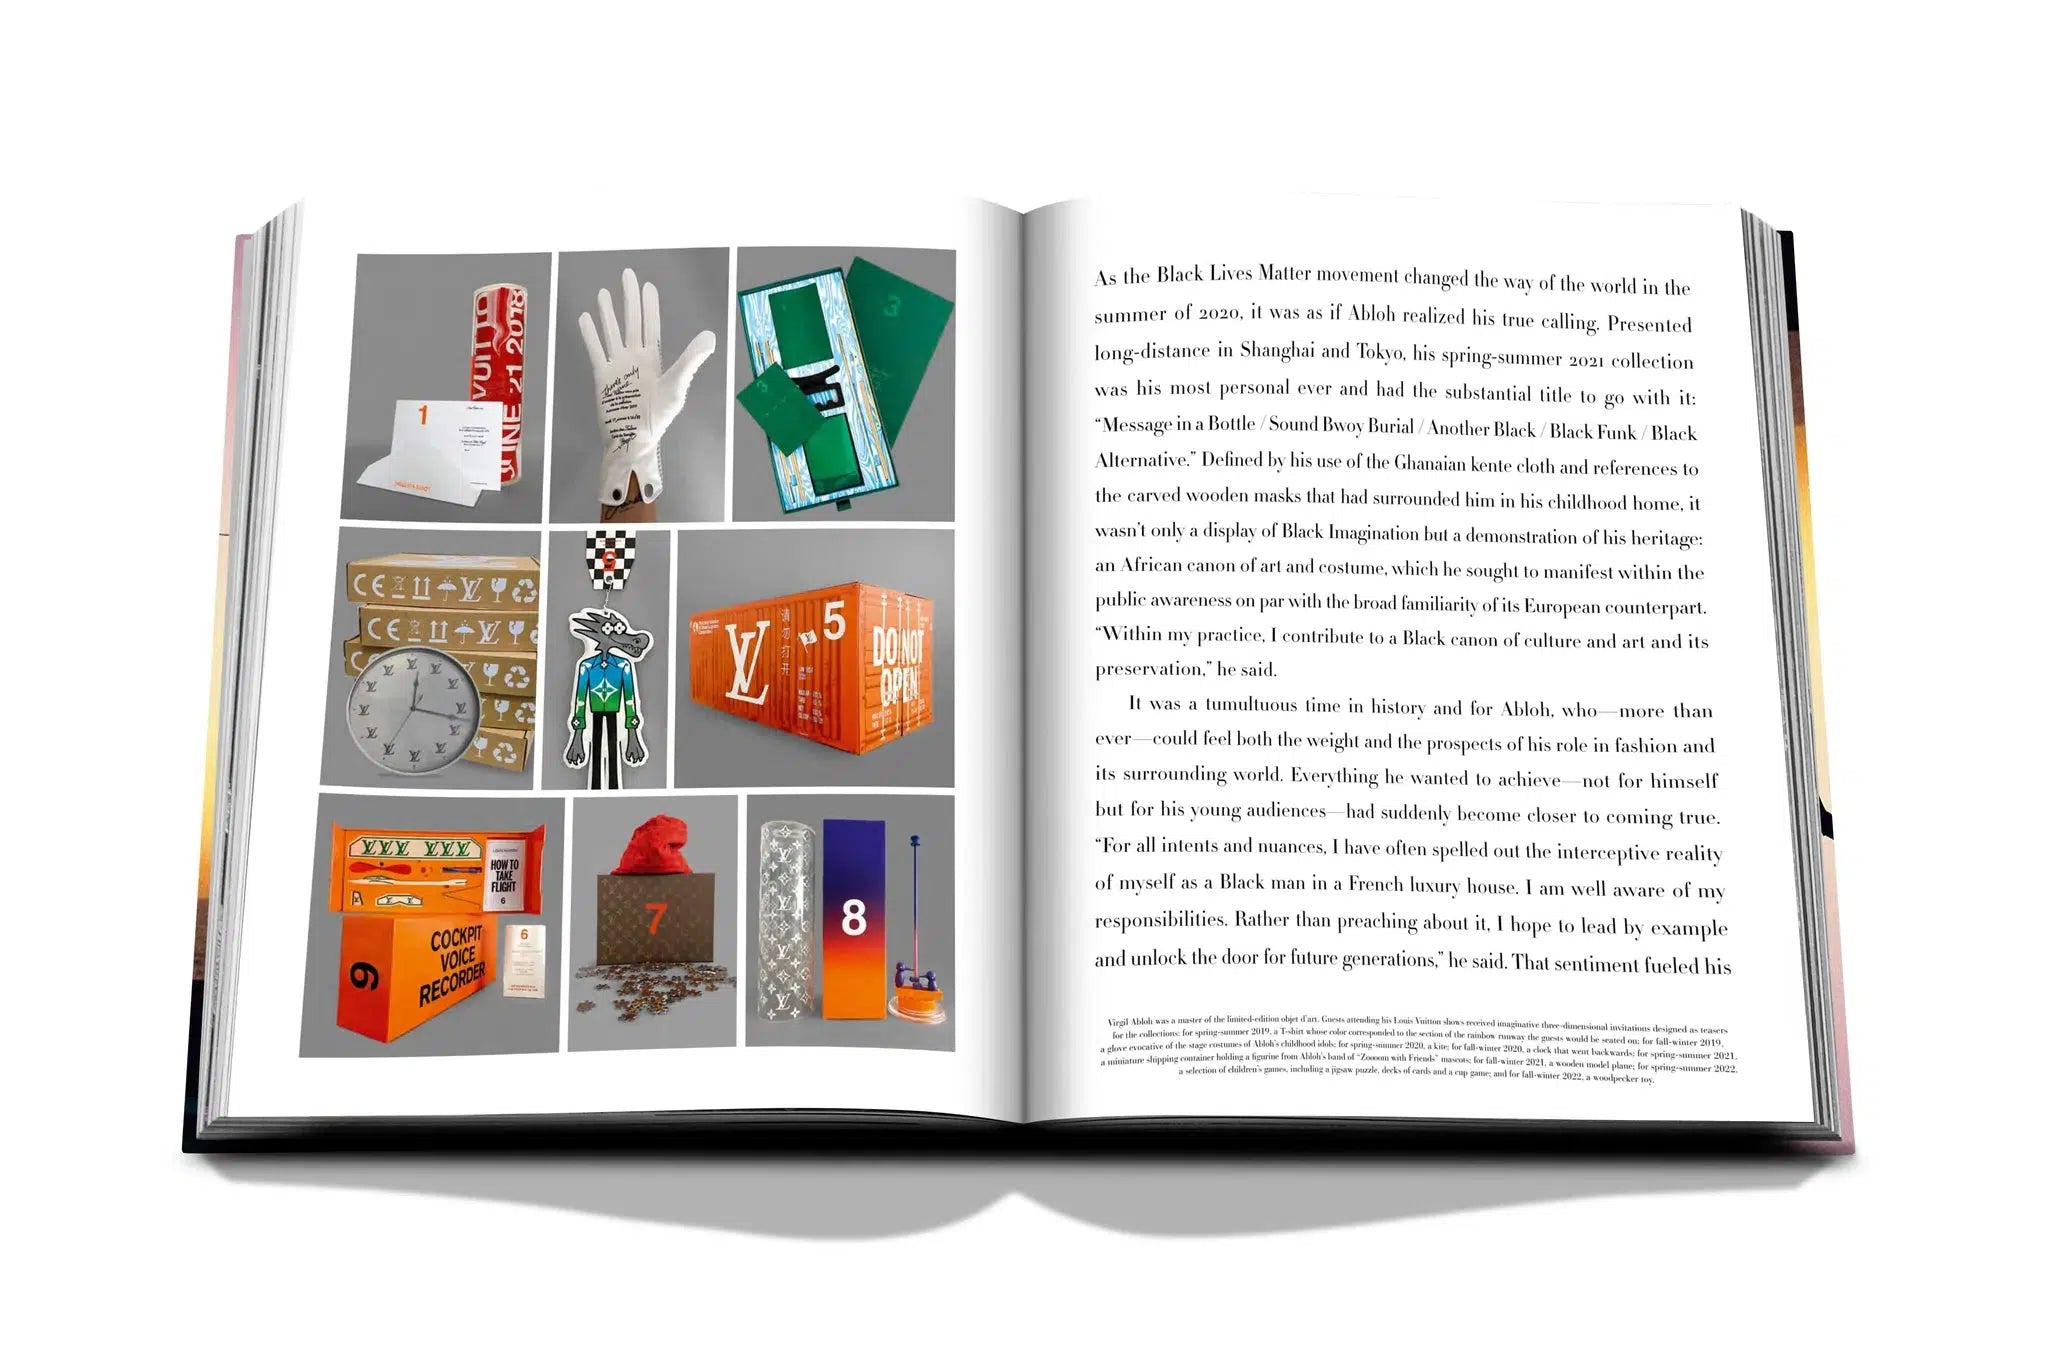 Assouline - Louis Vuitton: Virgil Abloh (Ultimate Edition)-Bücher-Assouline-TOJU Interior